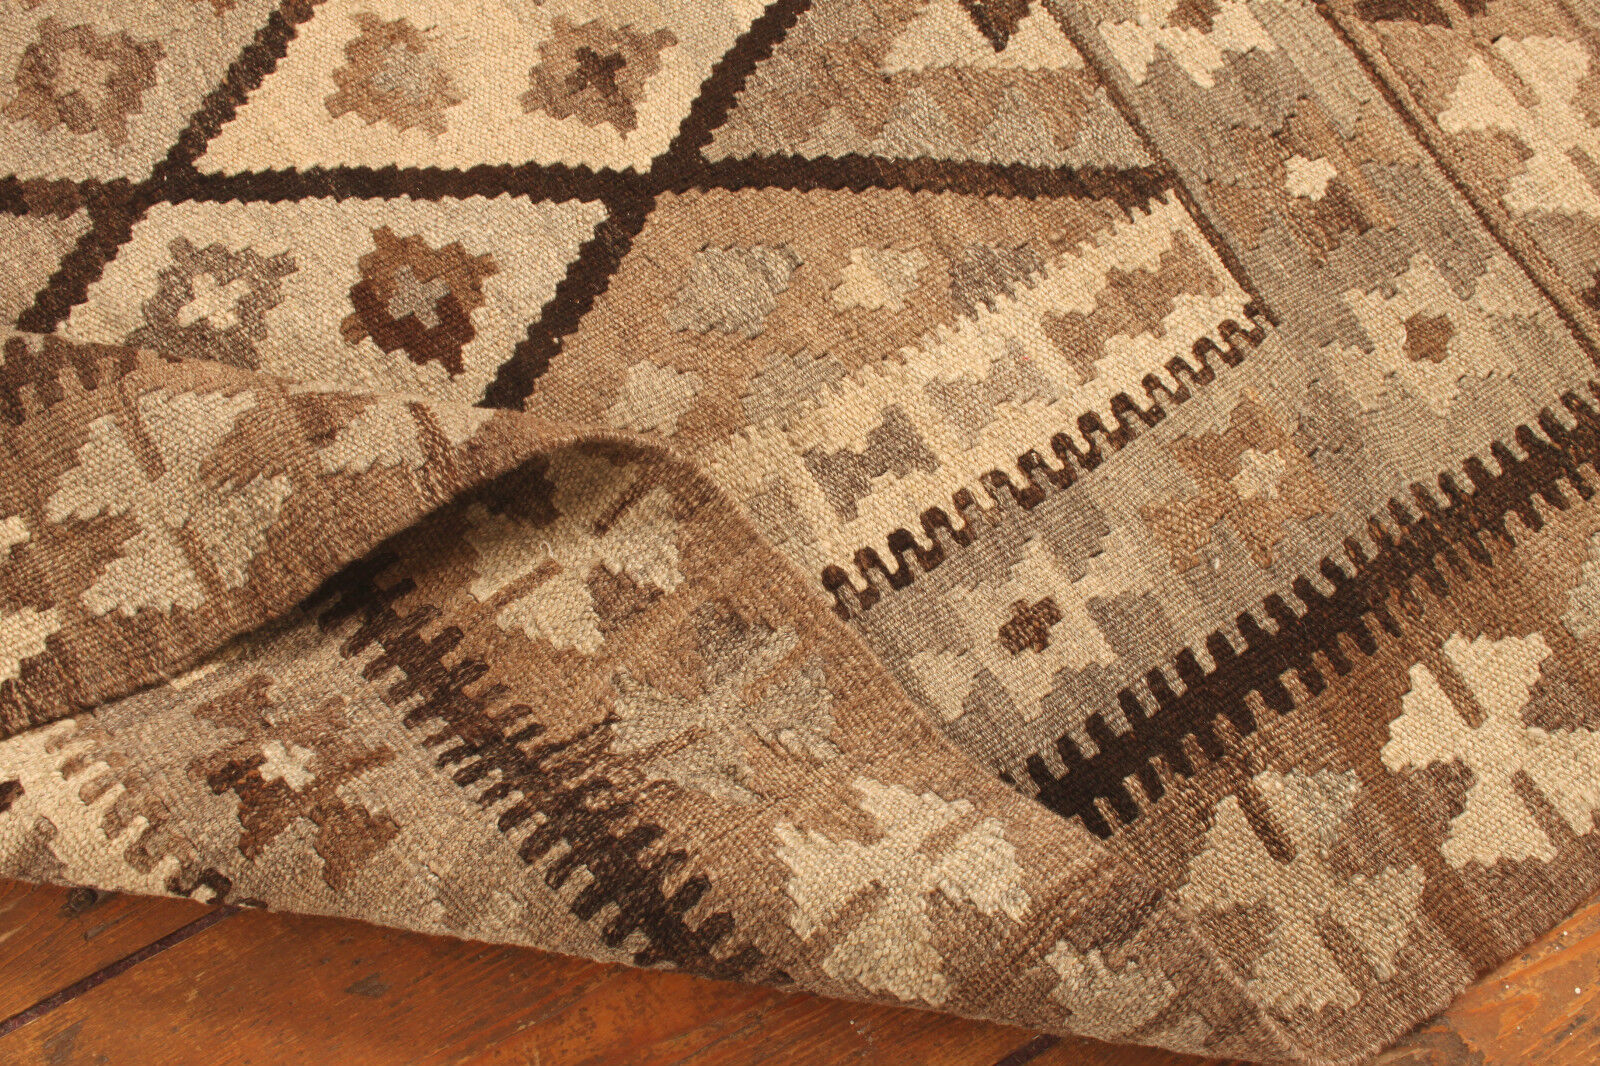 Back view of the Handmade Vintage Afghan Flatweave Kilim showcasing craftsmanship